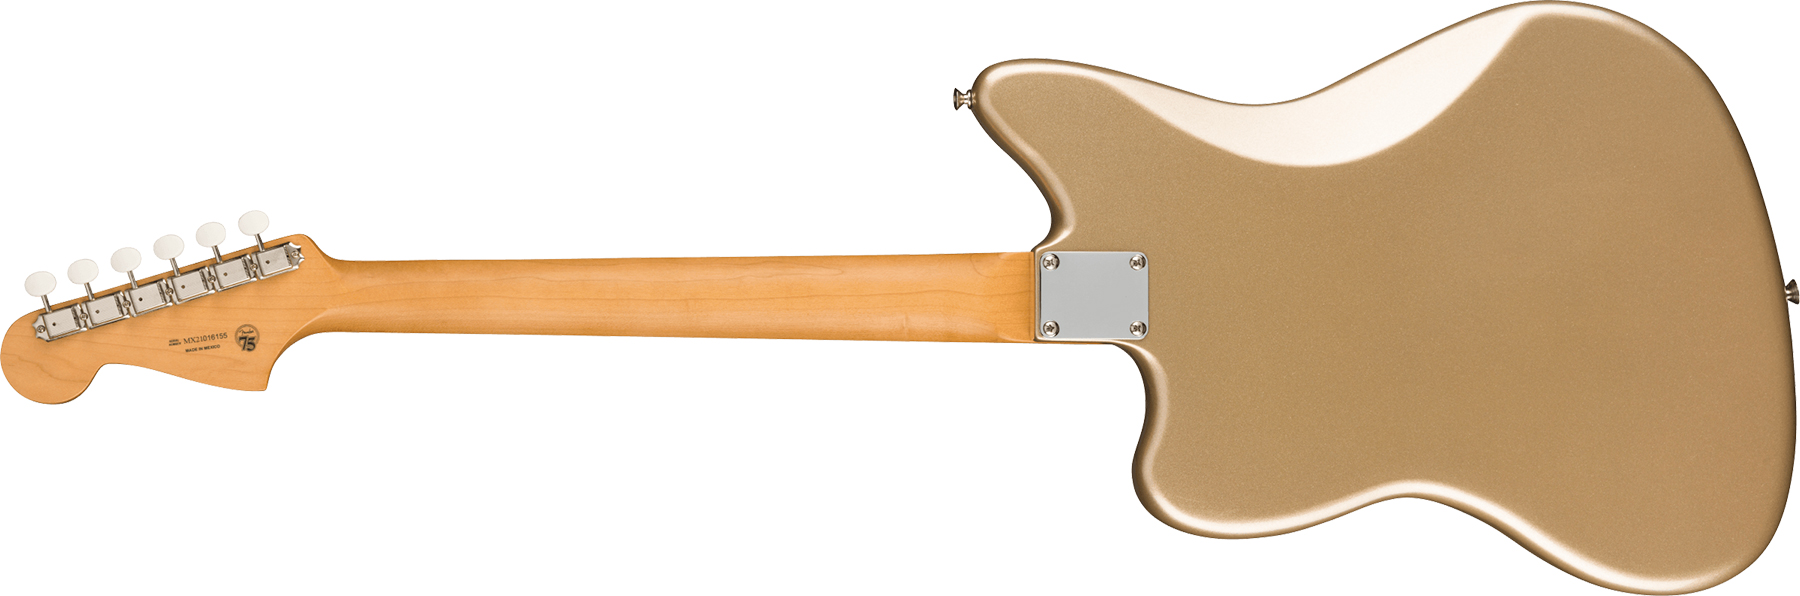 Fender Jazzmaster Gold Foil Ltd Mex 3mh Trem Bigsby Eb - Shoreline Gold - Retro-Rock-E-Gitarre - Variation 1